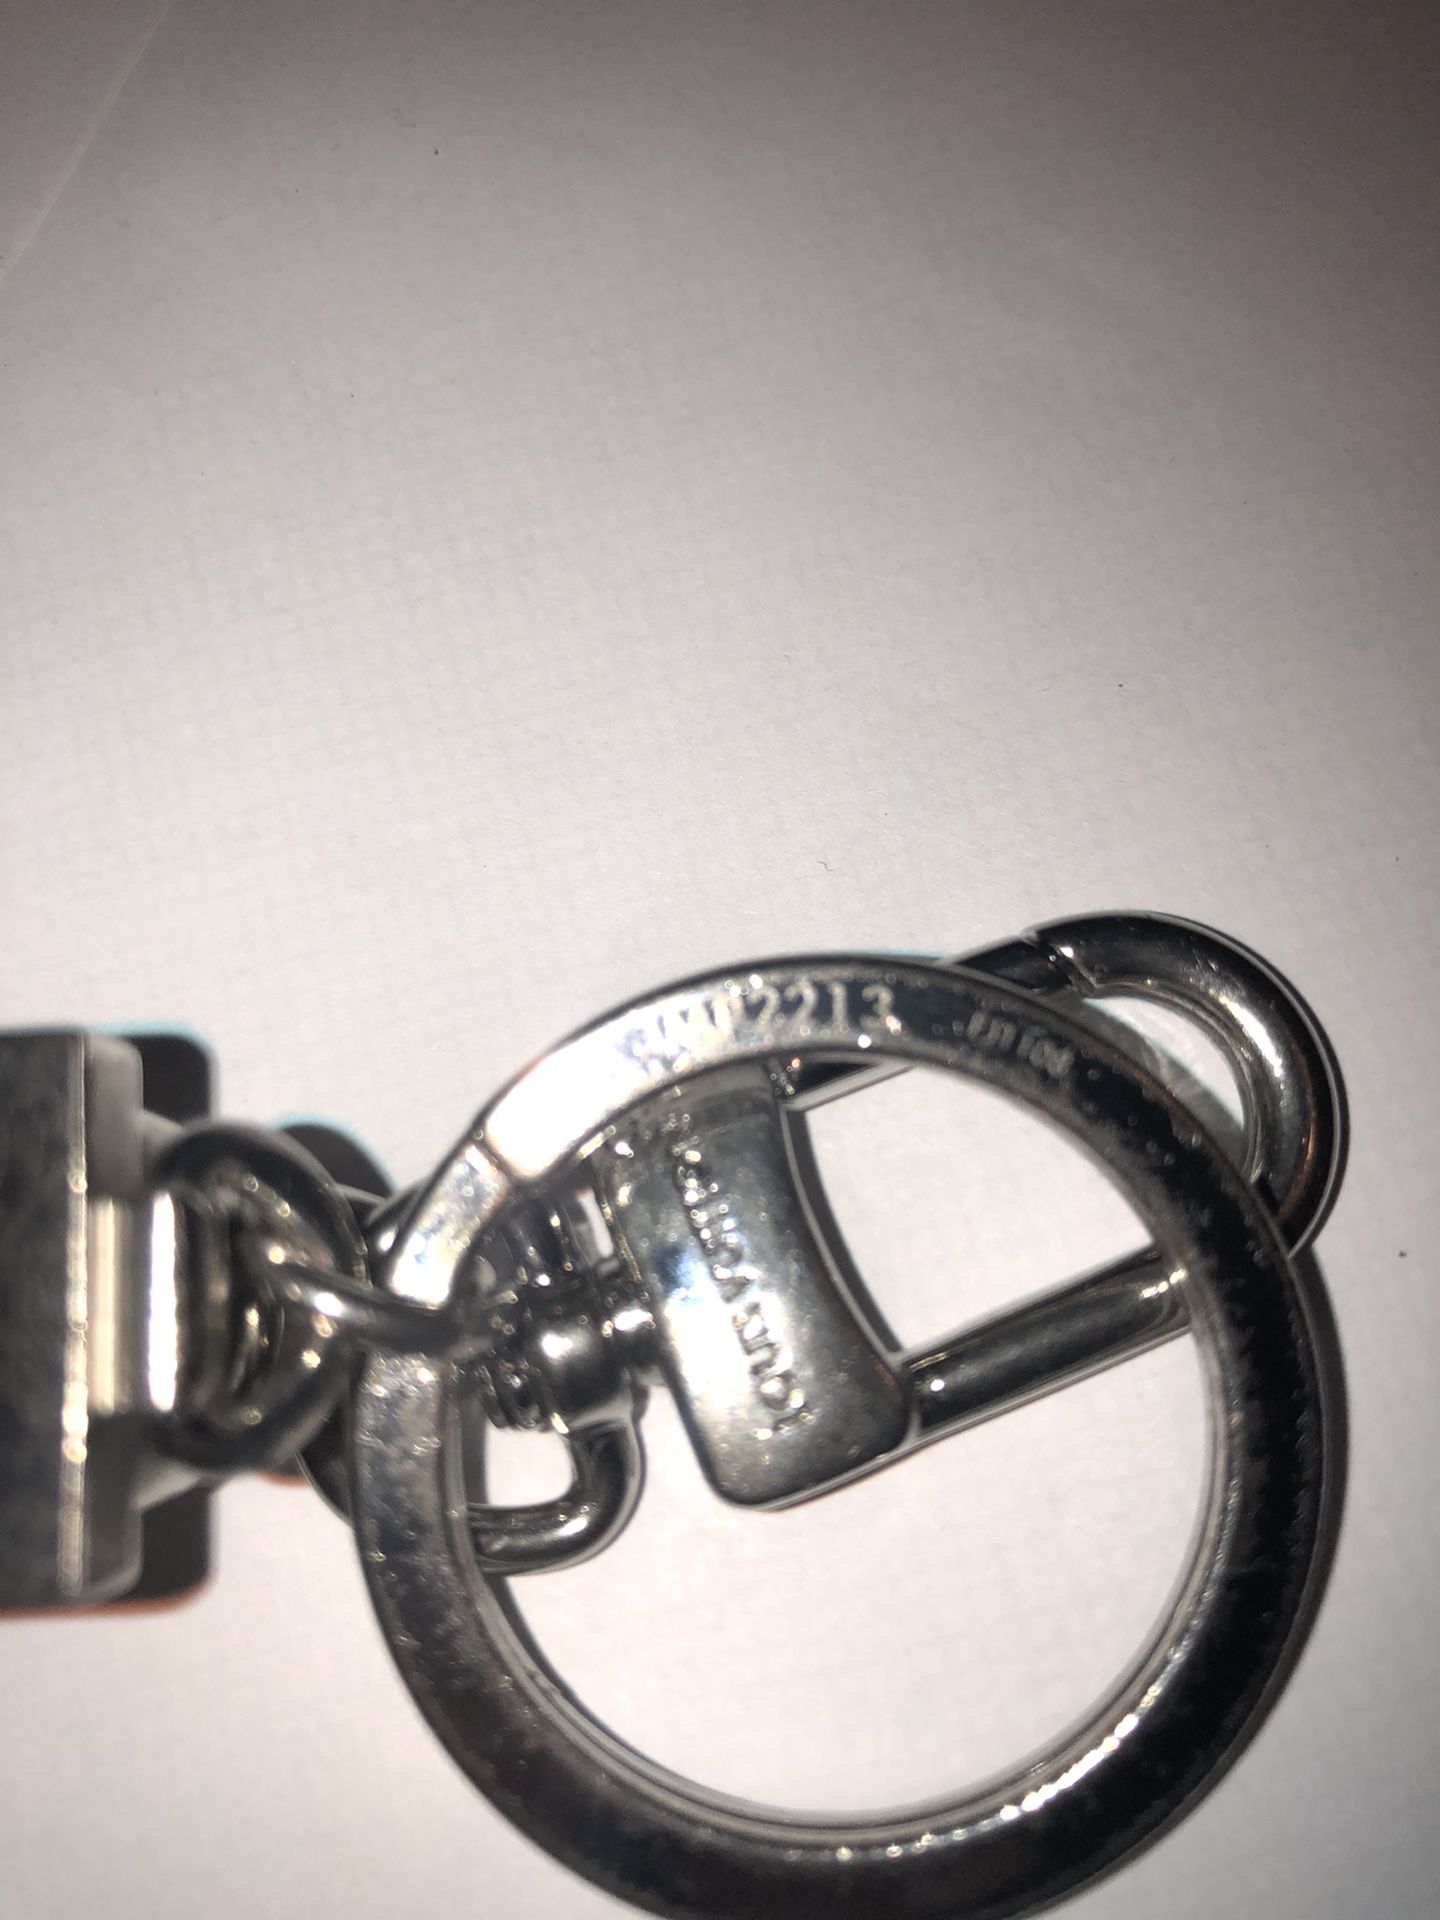 Preloved Louis Vuitton Astronaut Key Chain 091323